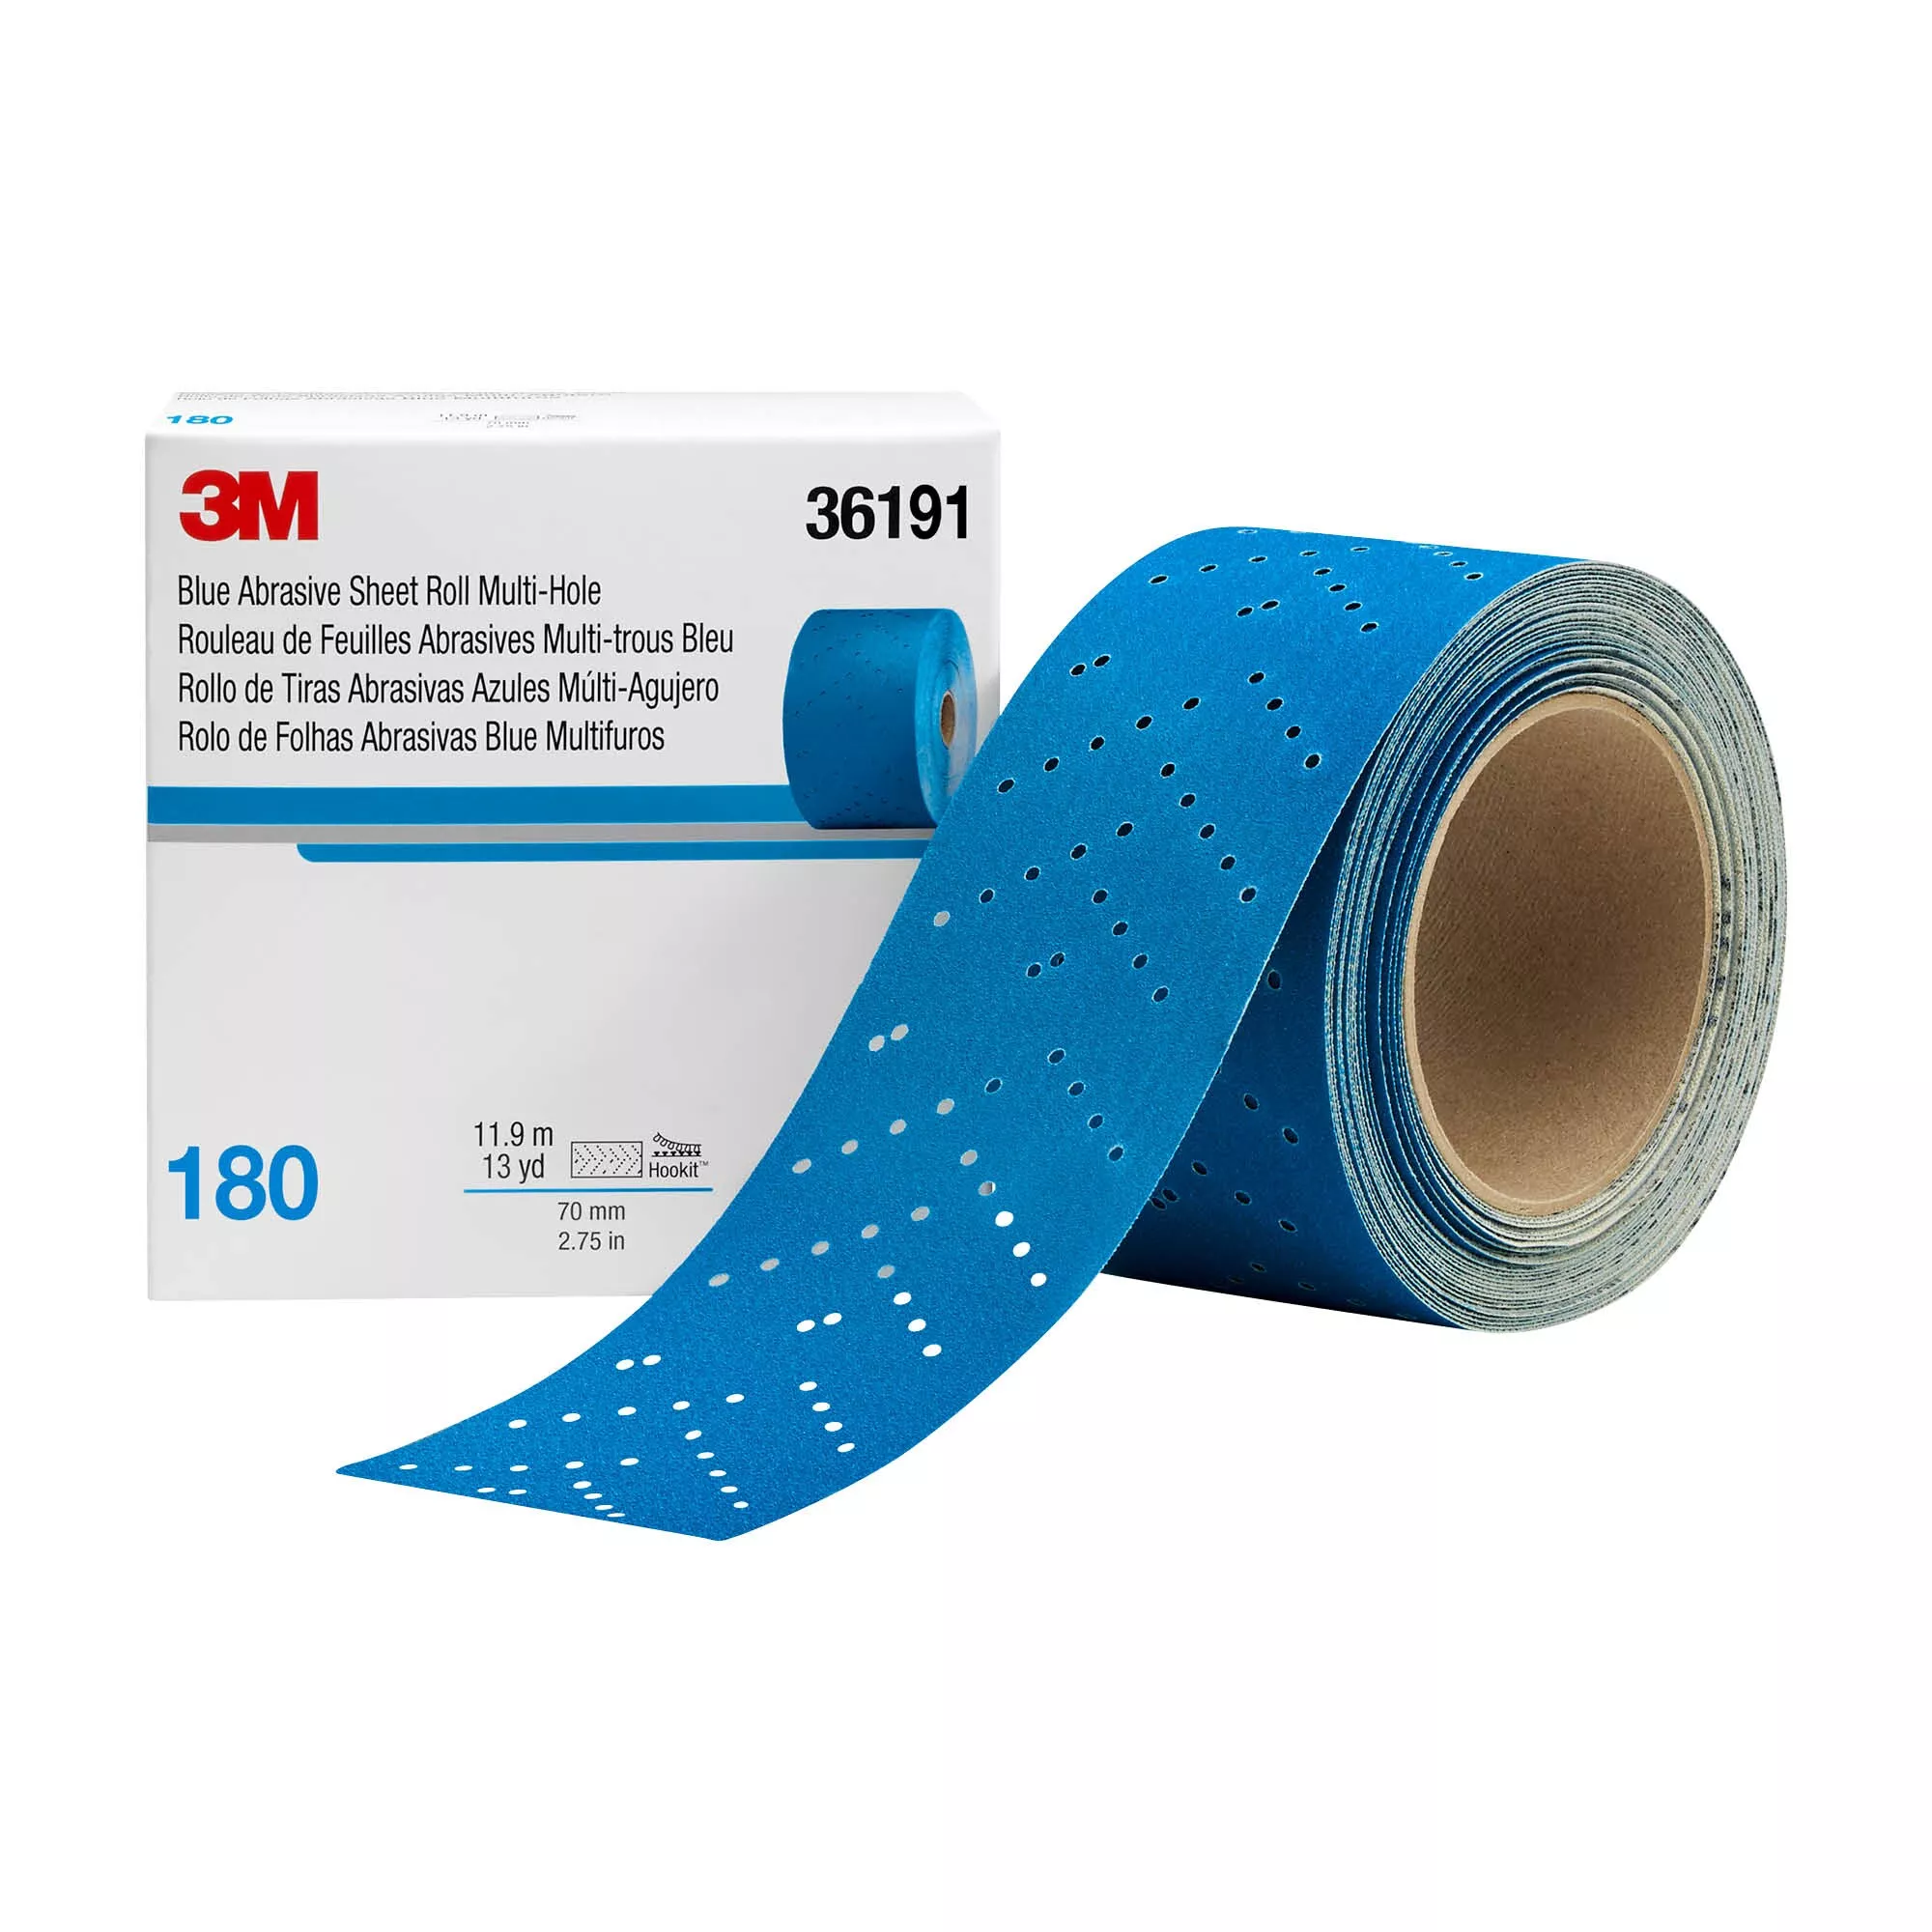 SKU 7100091070 | 3M™ Hookit™ Blue Abrasive Sheet Roll Multi-hole